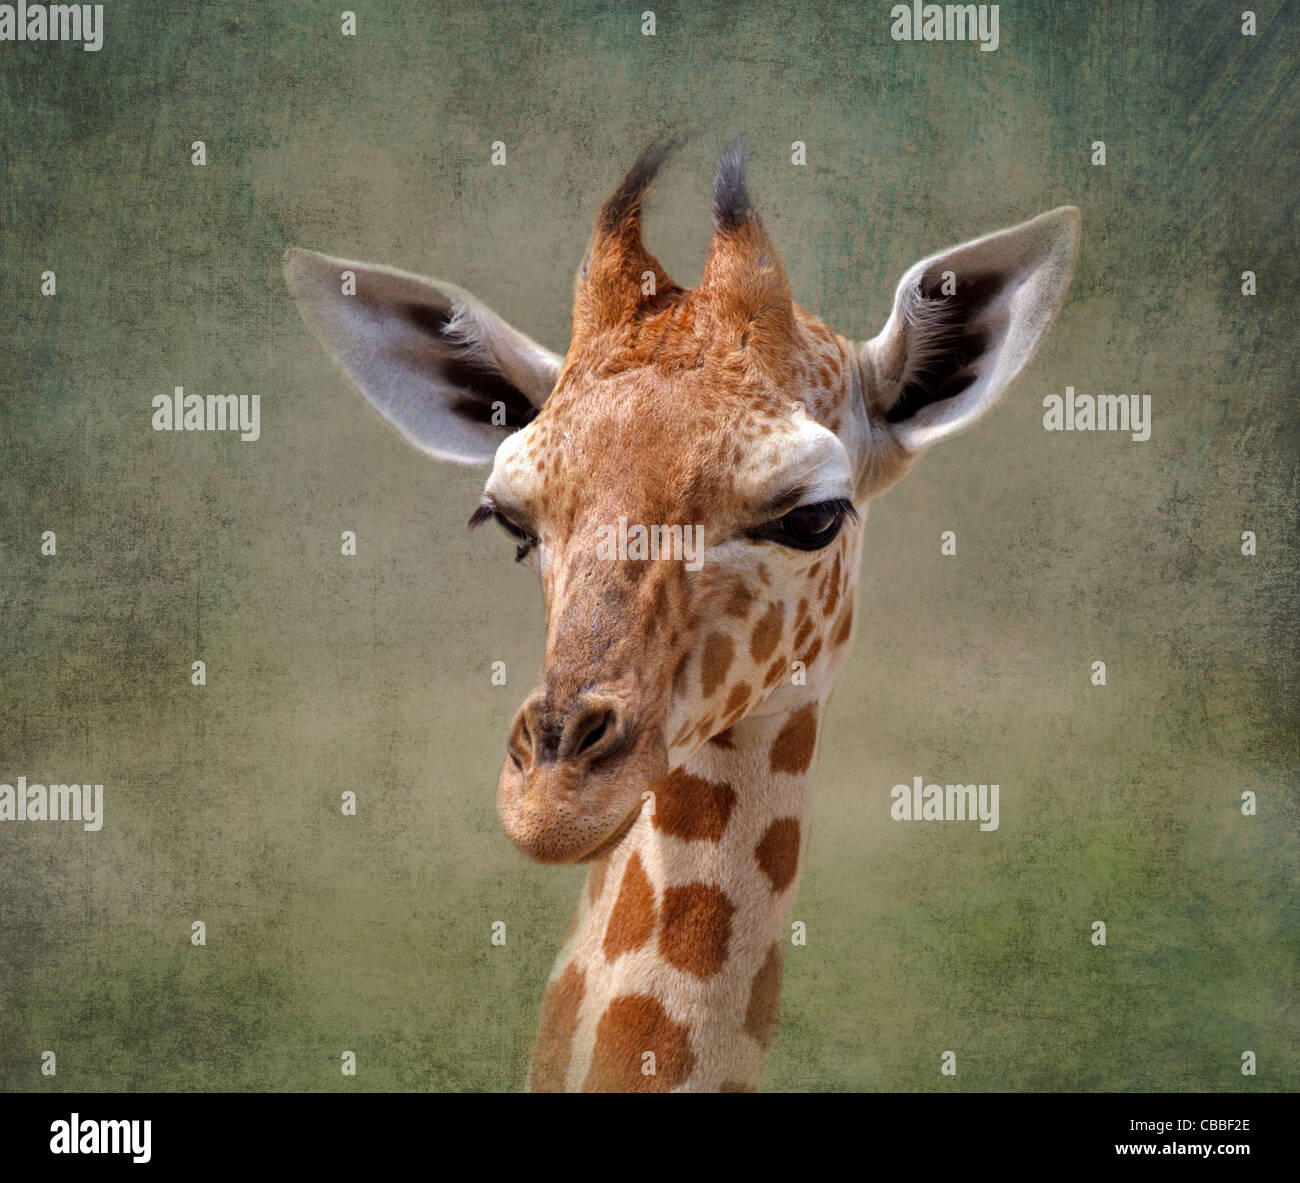 Bebé; jirafa Giraffa camelopardalis. Retrato de un bebé de seis semanas las jirafas. Foto de stock